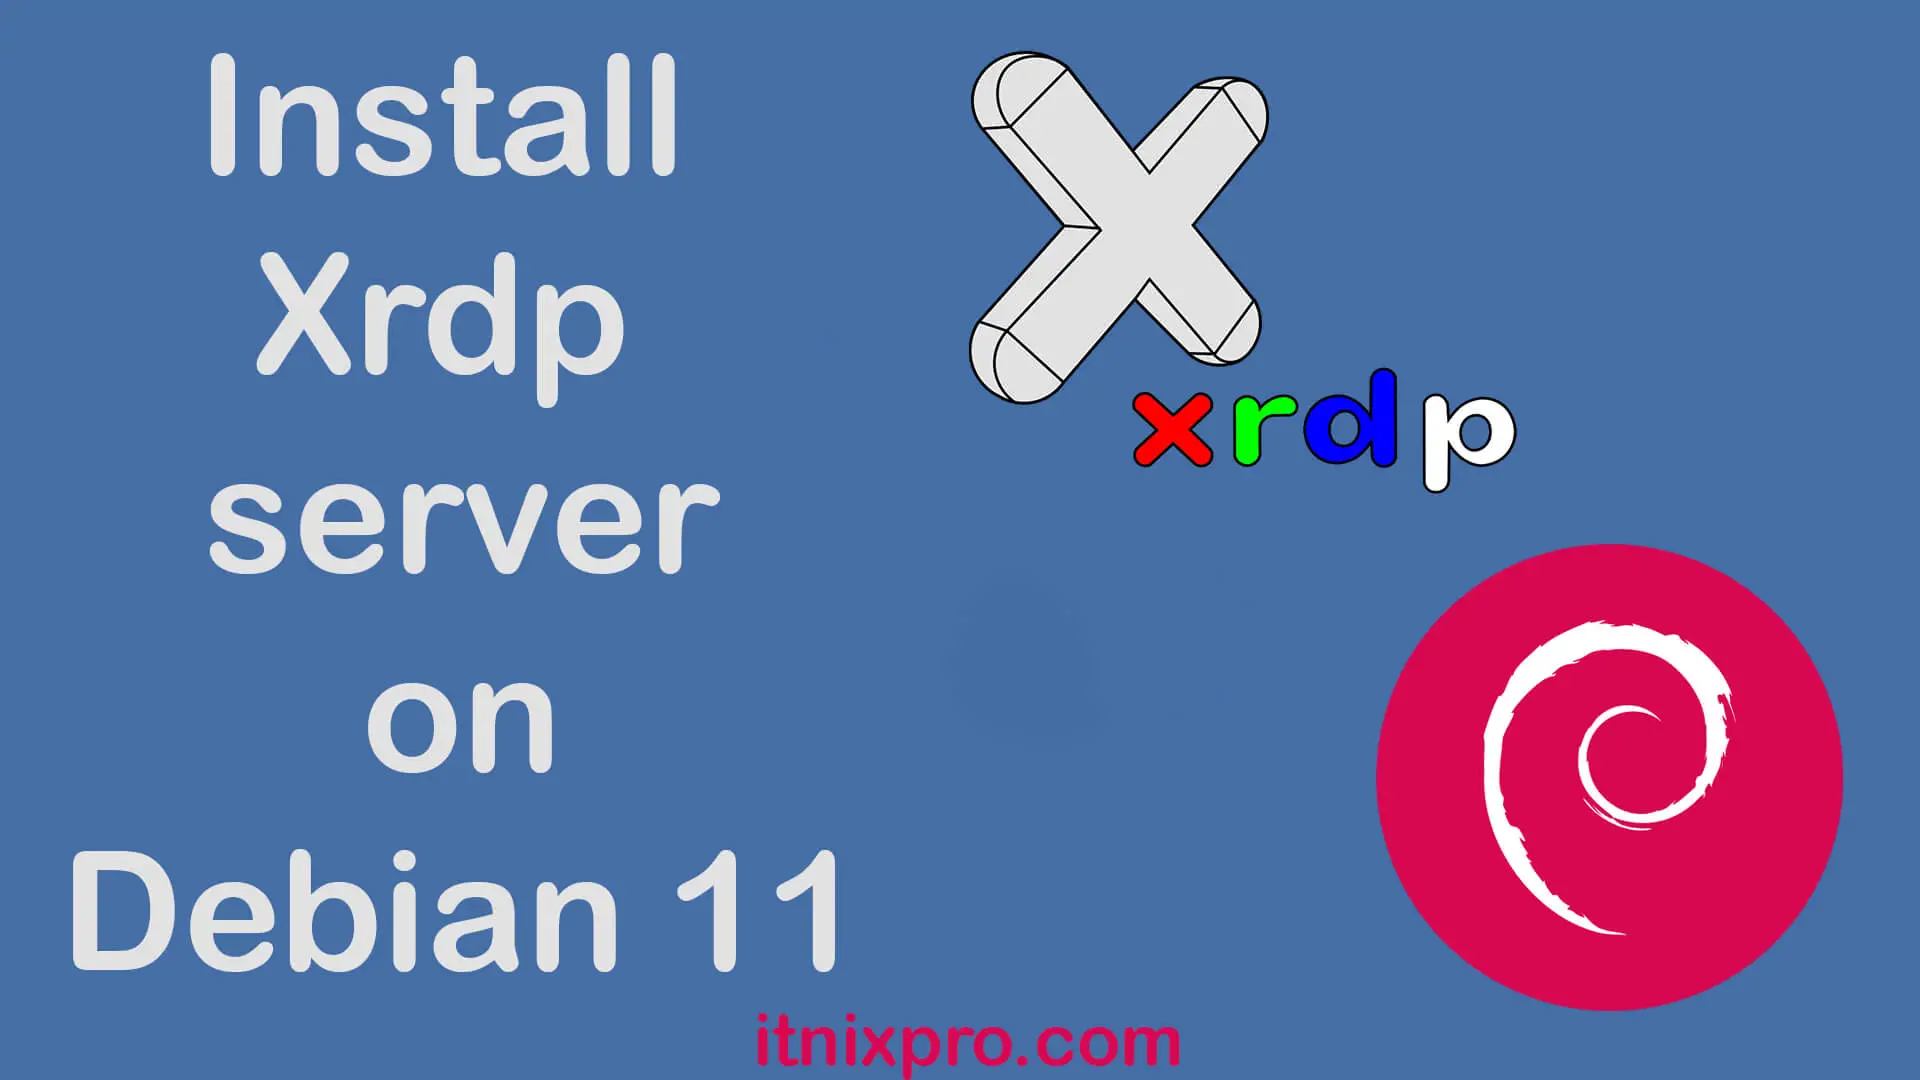 Install Xrdp server on Debian 11